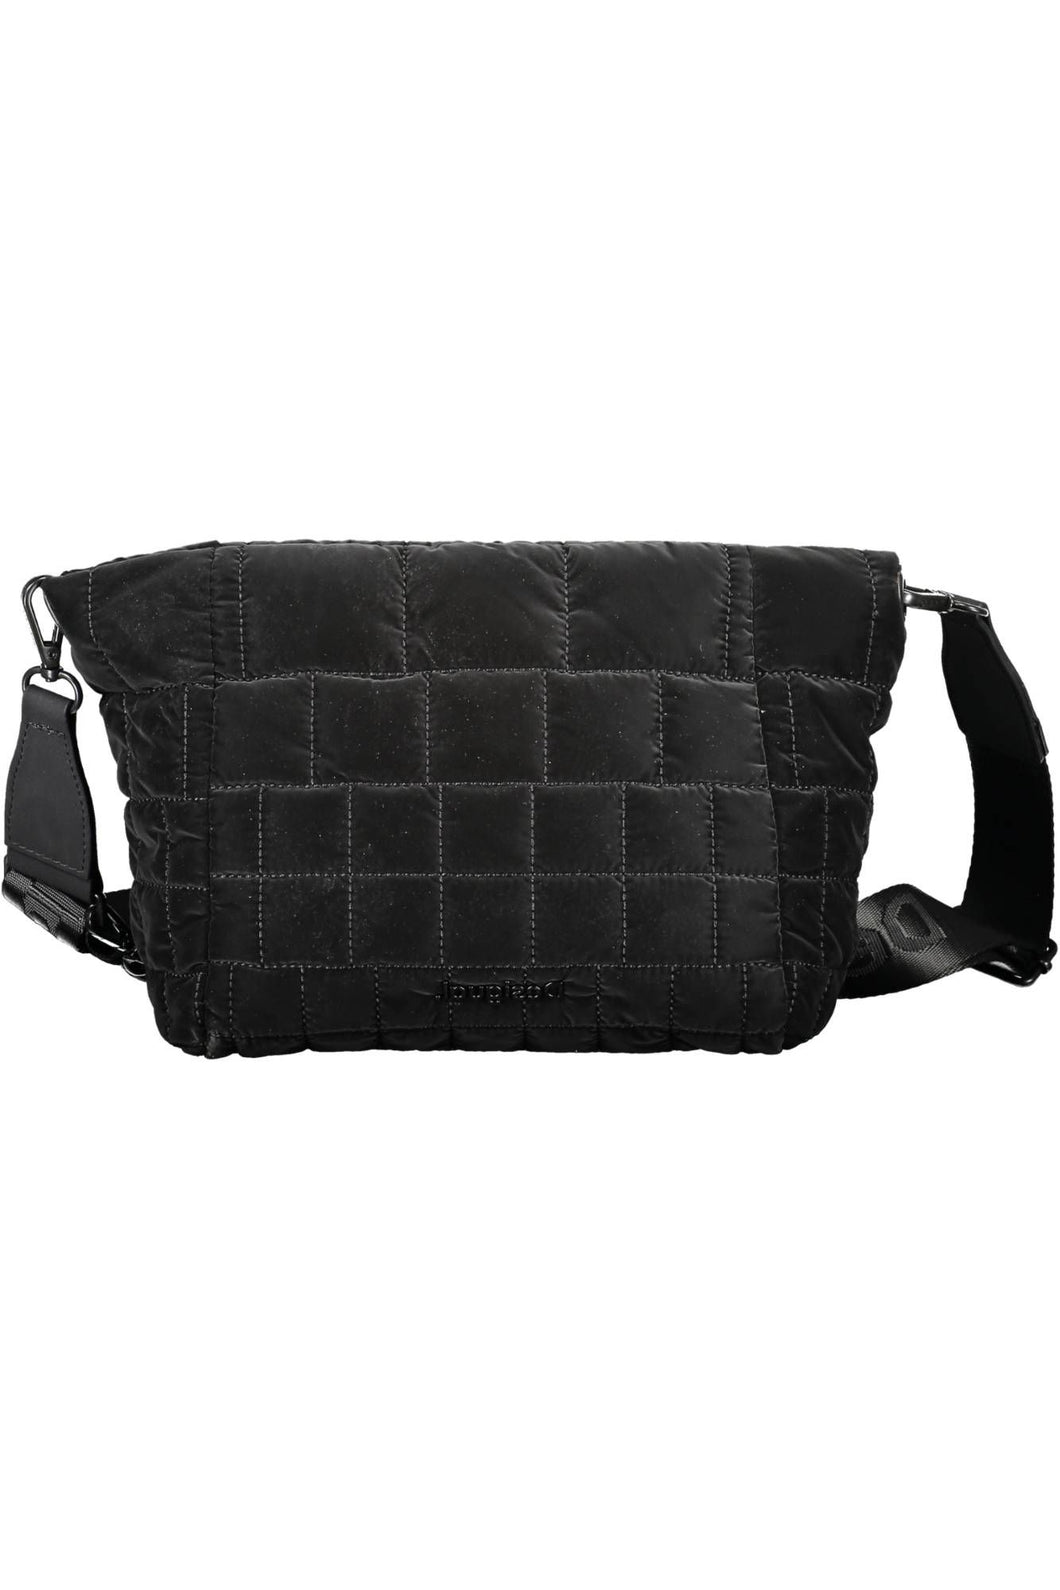 Desigual Black Polyurethane Handbag